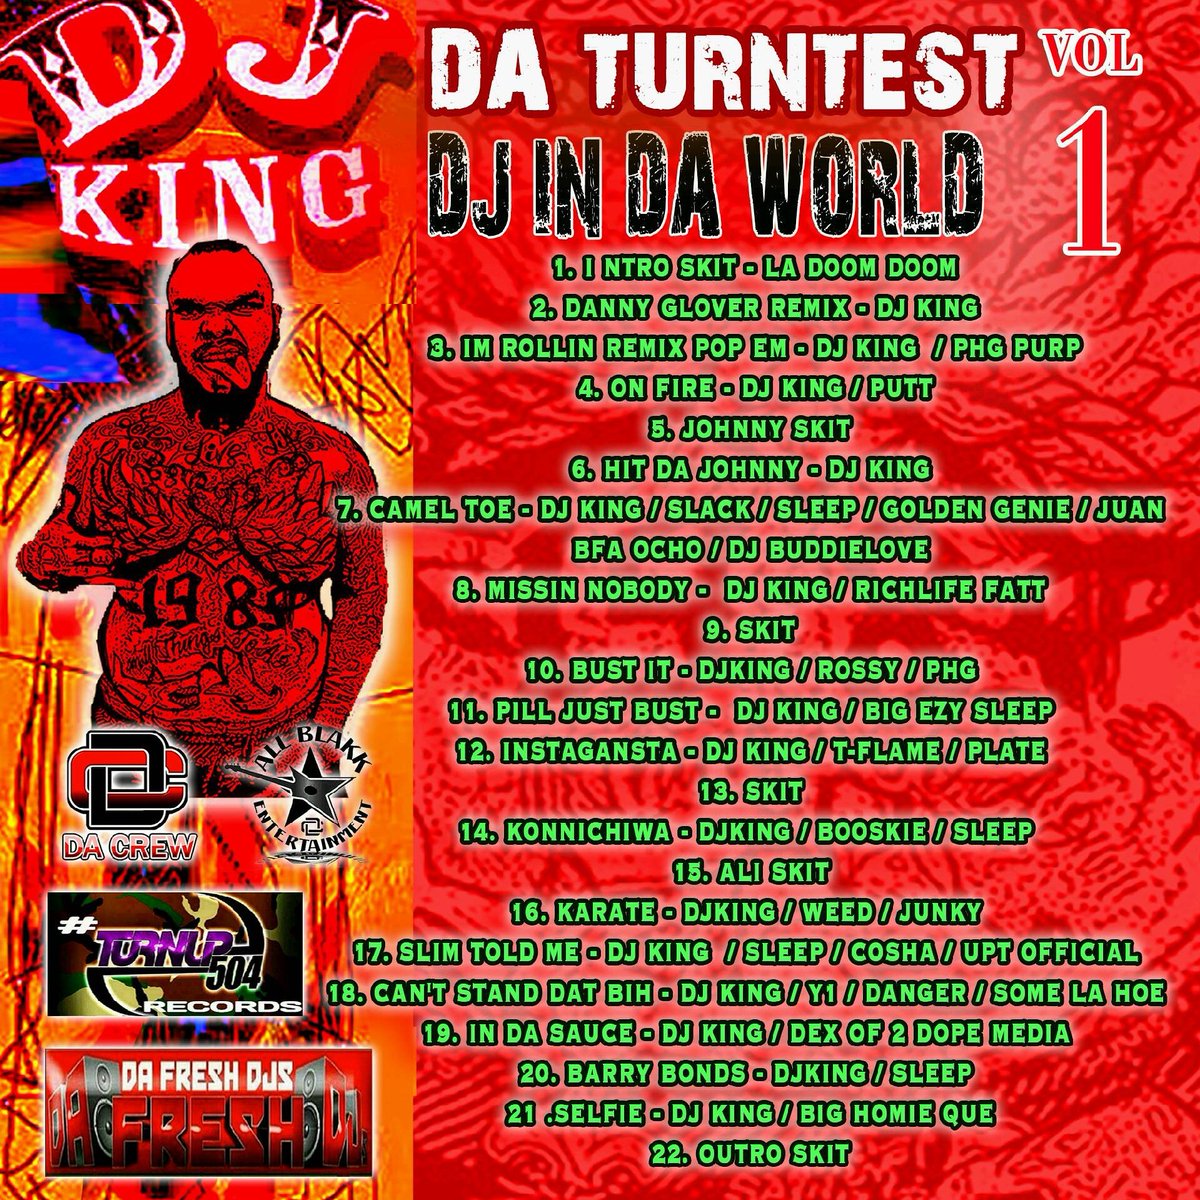 Listen to #DATurnestDJIntheWorlD VOL.1 by DJ King #np on #SoundCloud soundcloud.com/turnup504r/dat…